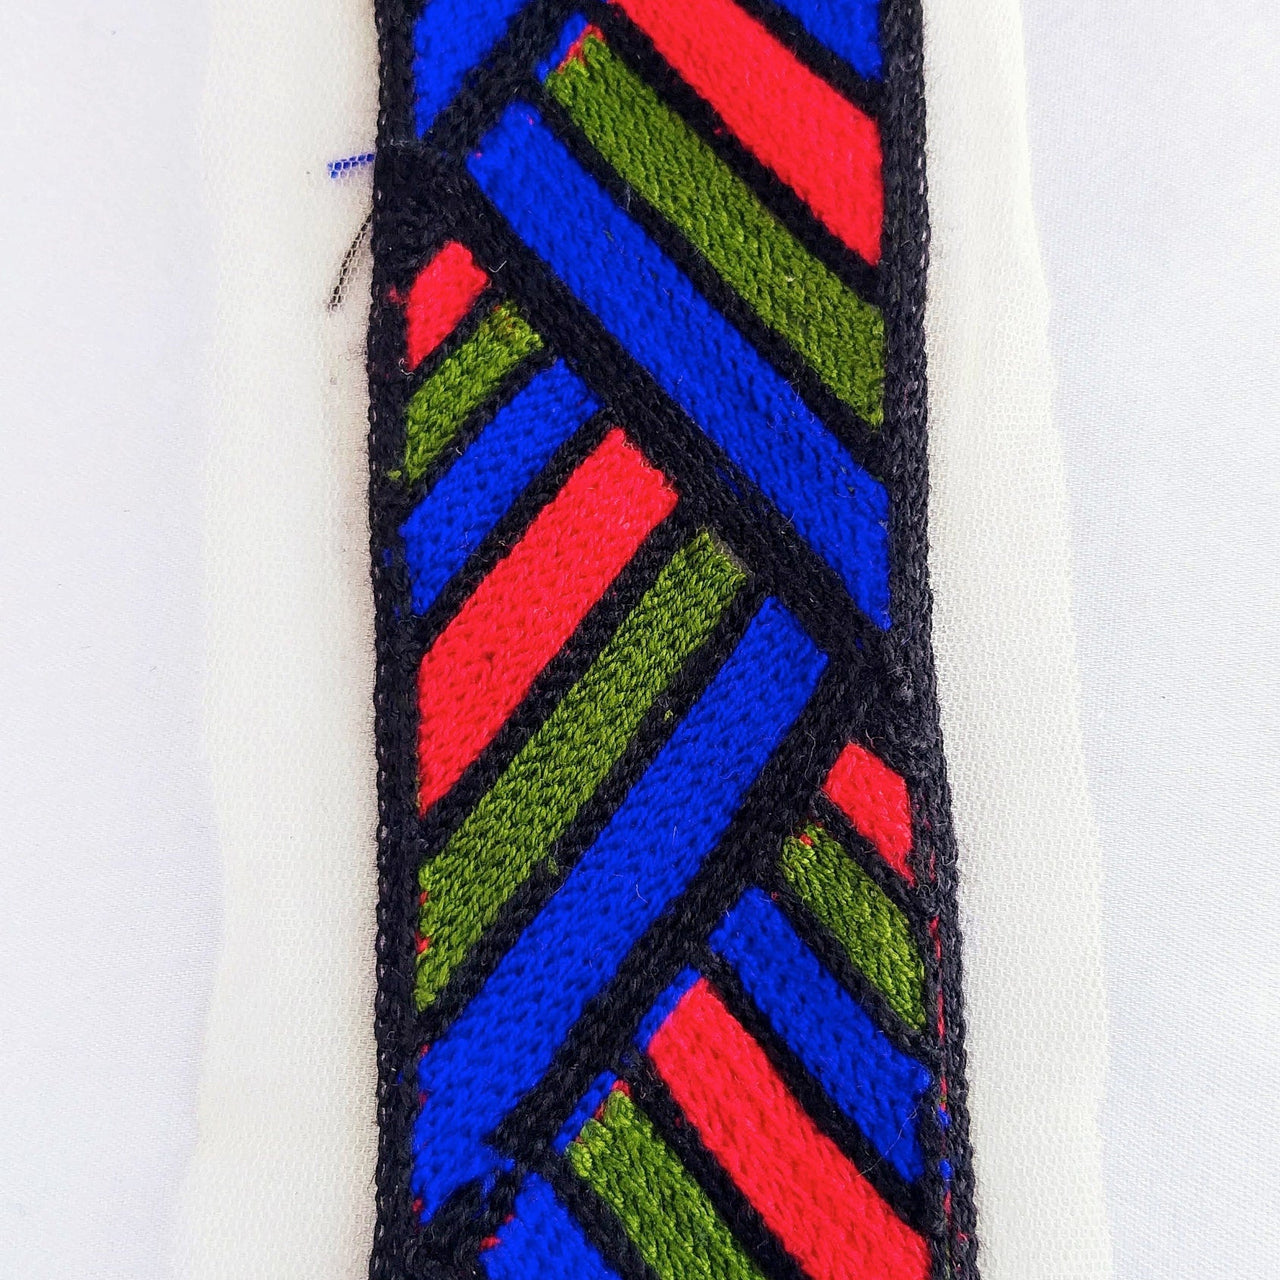 Beige Net Lace in Blue Embroidery, Geometric Pattern Trim, Indian Embroidered Trim Craft Ribbon Decorative Trim Costume Trim Trim By Yard